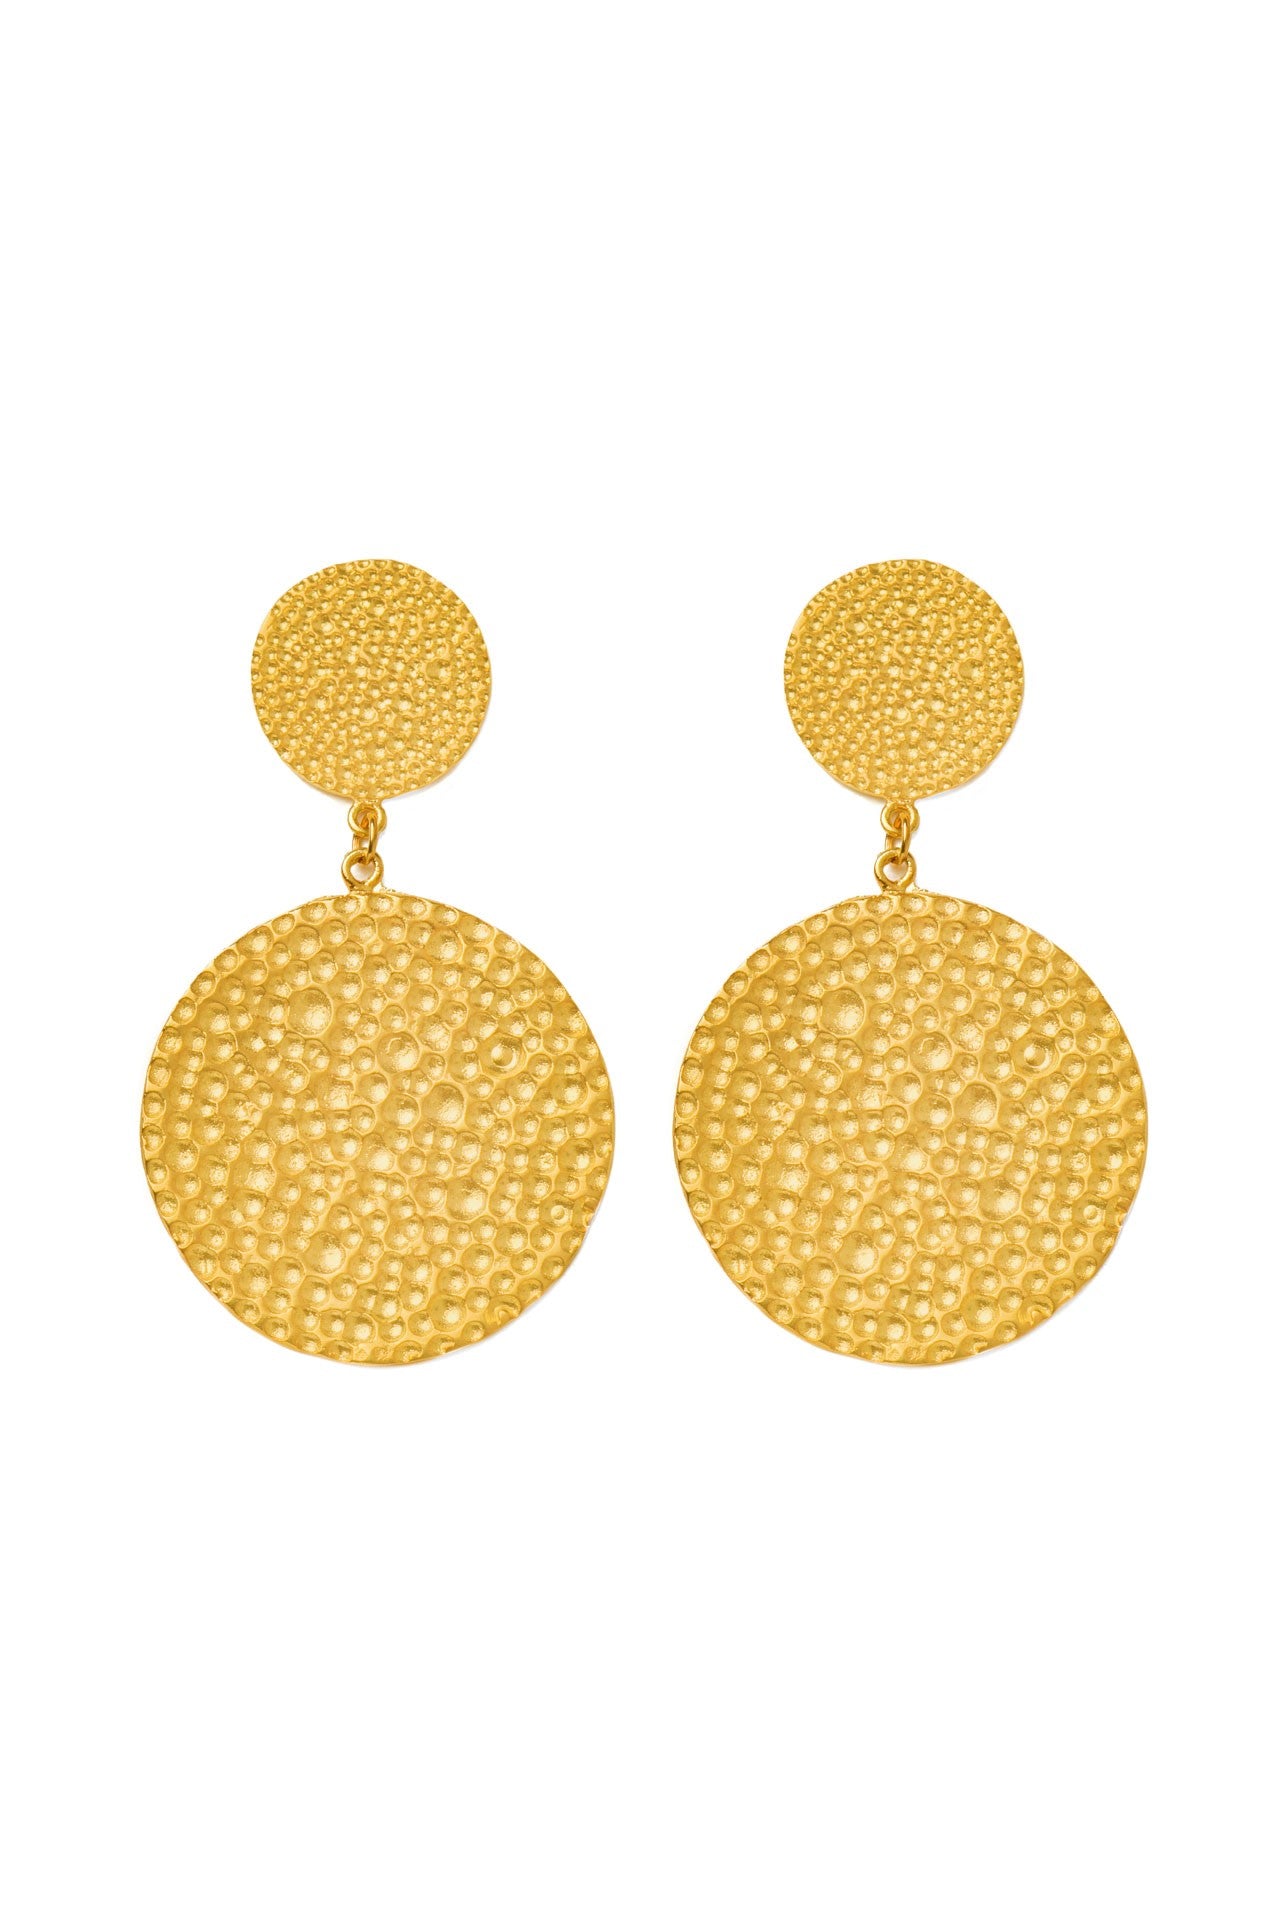 Gisele earrings by Pearl Martini